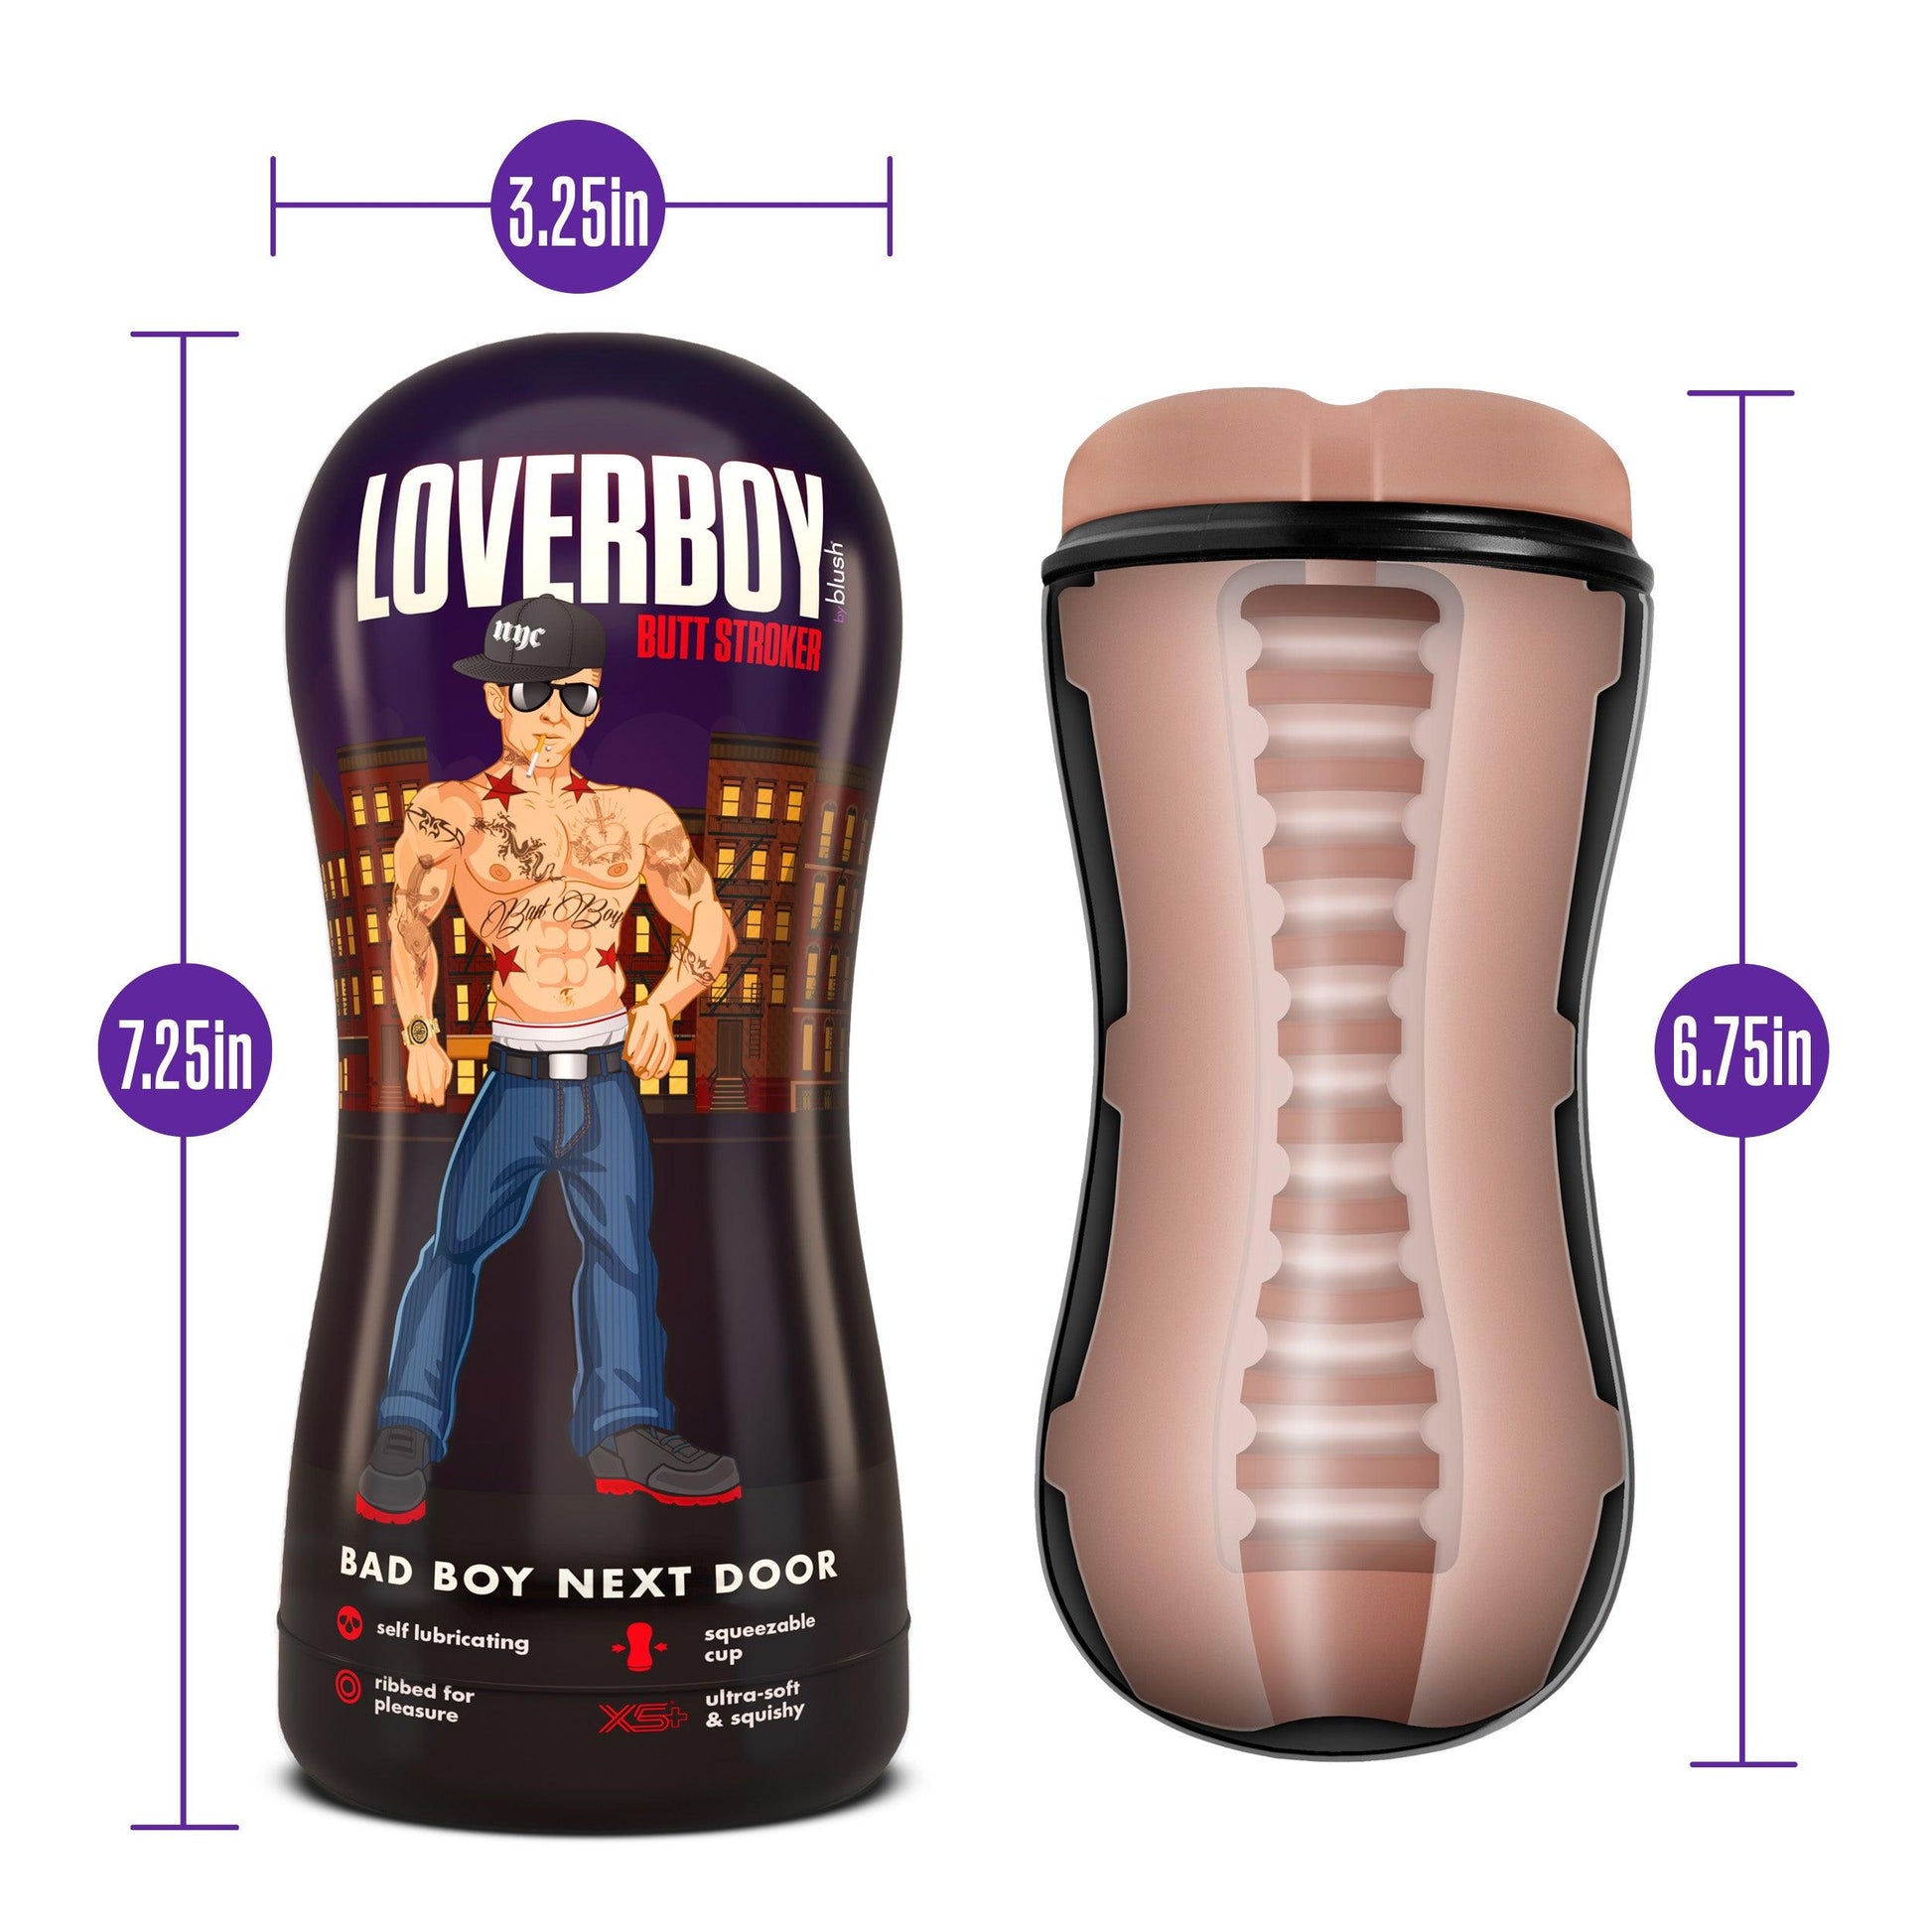 Loverboy - Bad Boy Next Door - Self Lubricating Stroker - Beige - My Sex Toy Hub